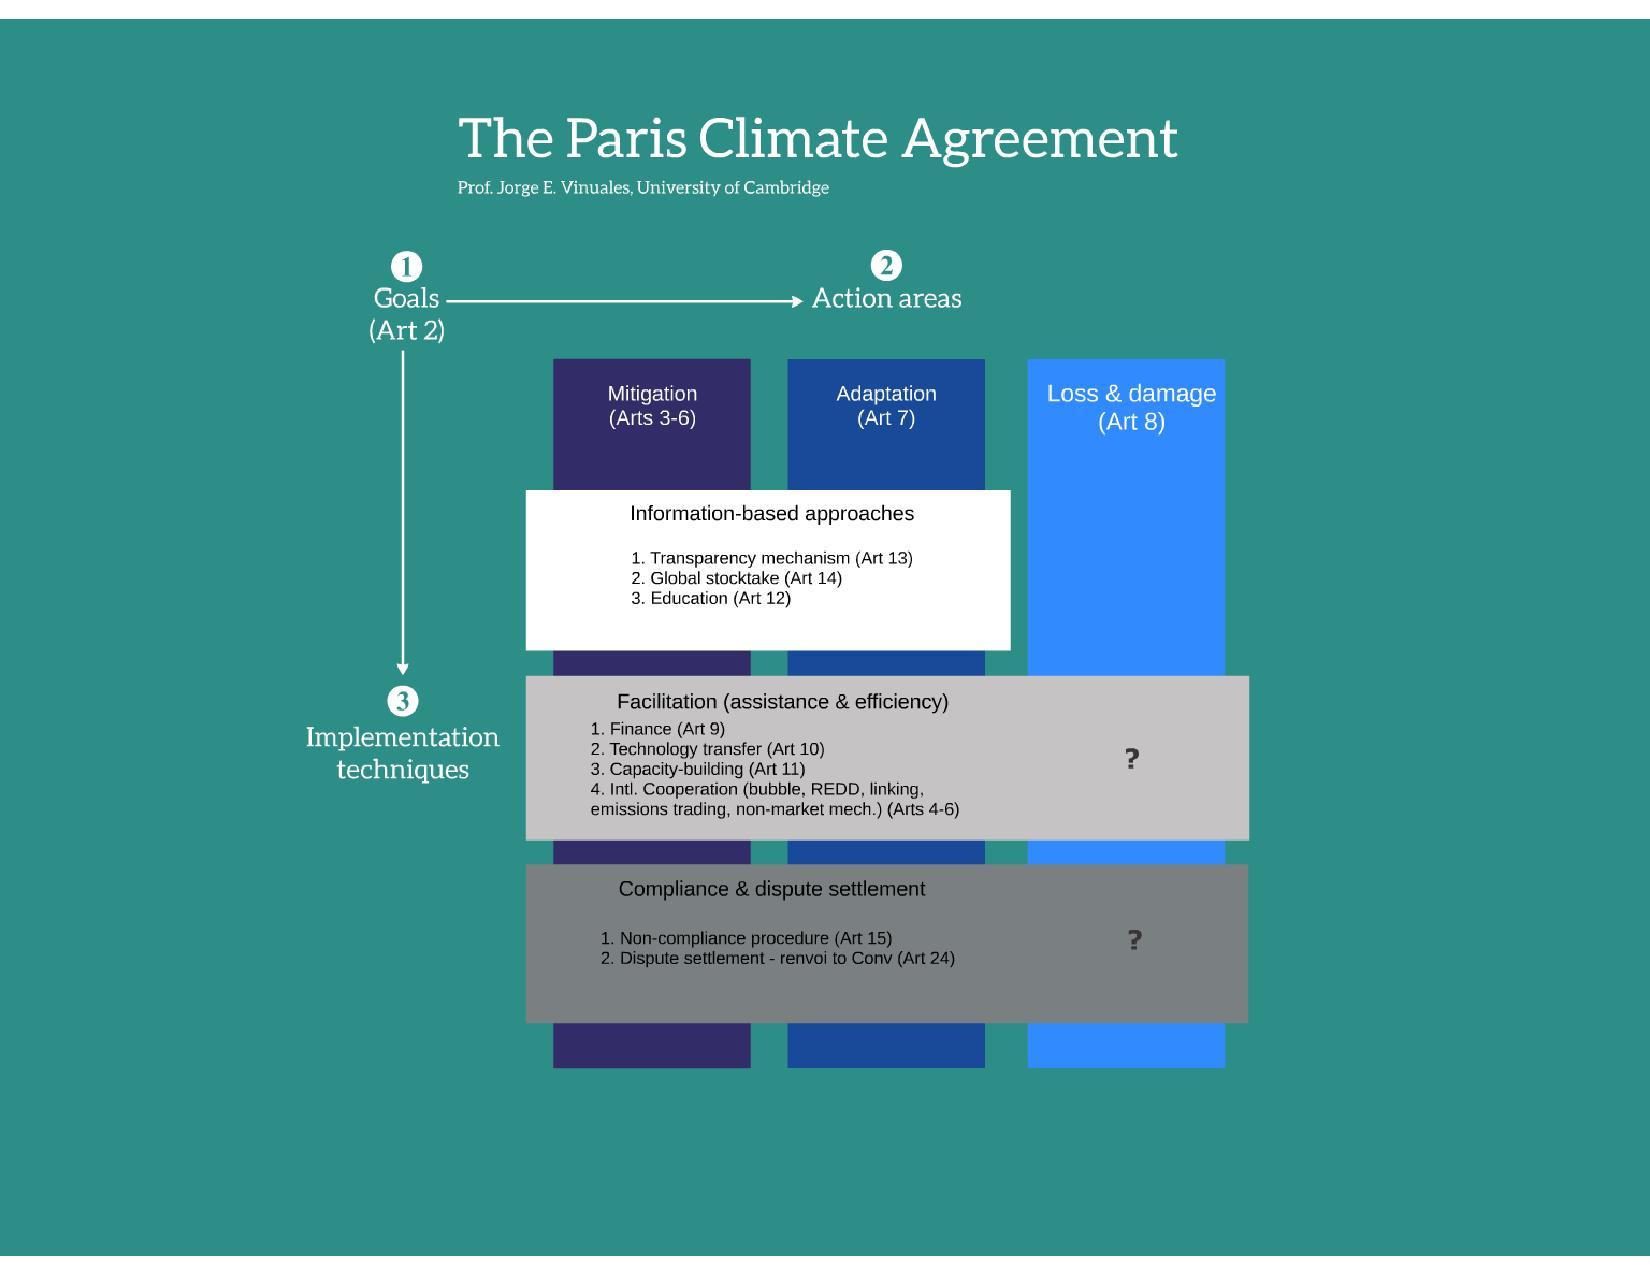 A Snapshot of COP21 Paris Climate Agreement